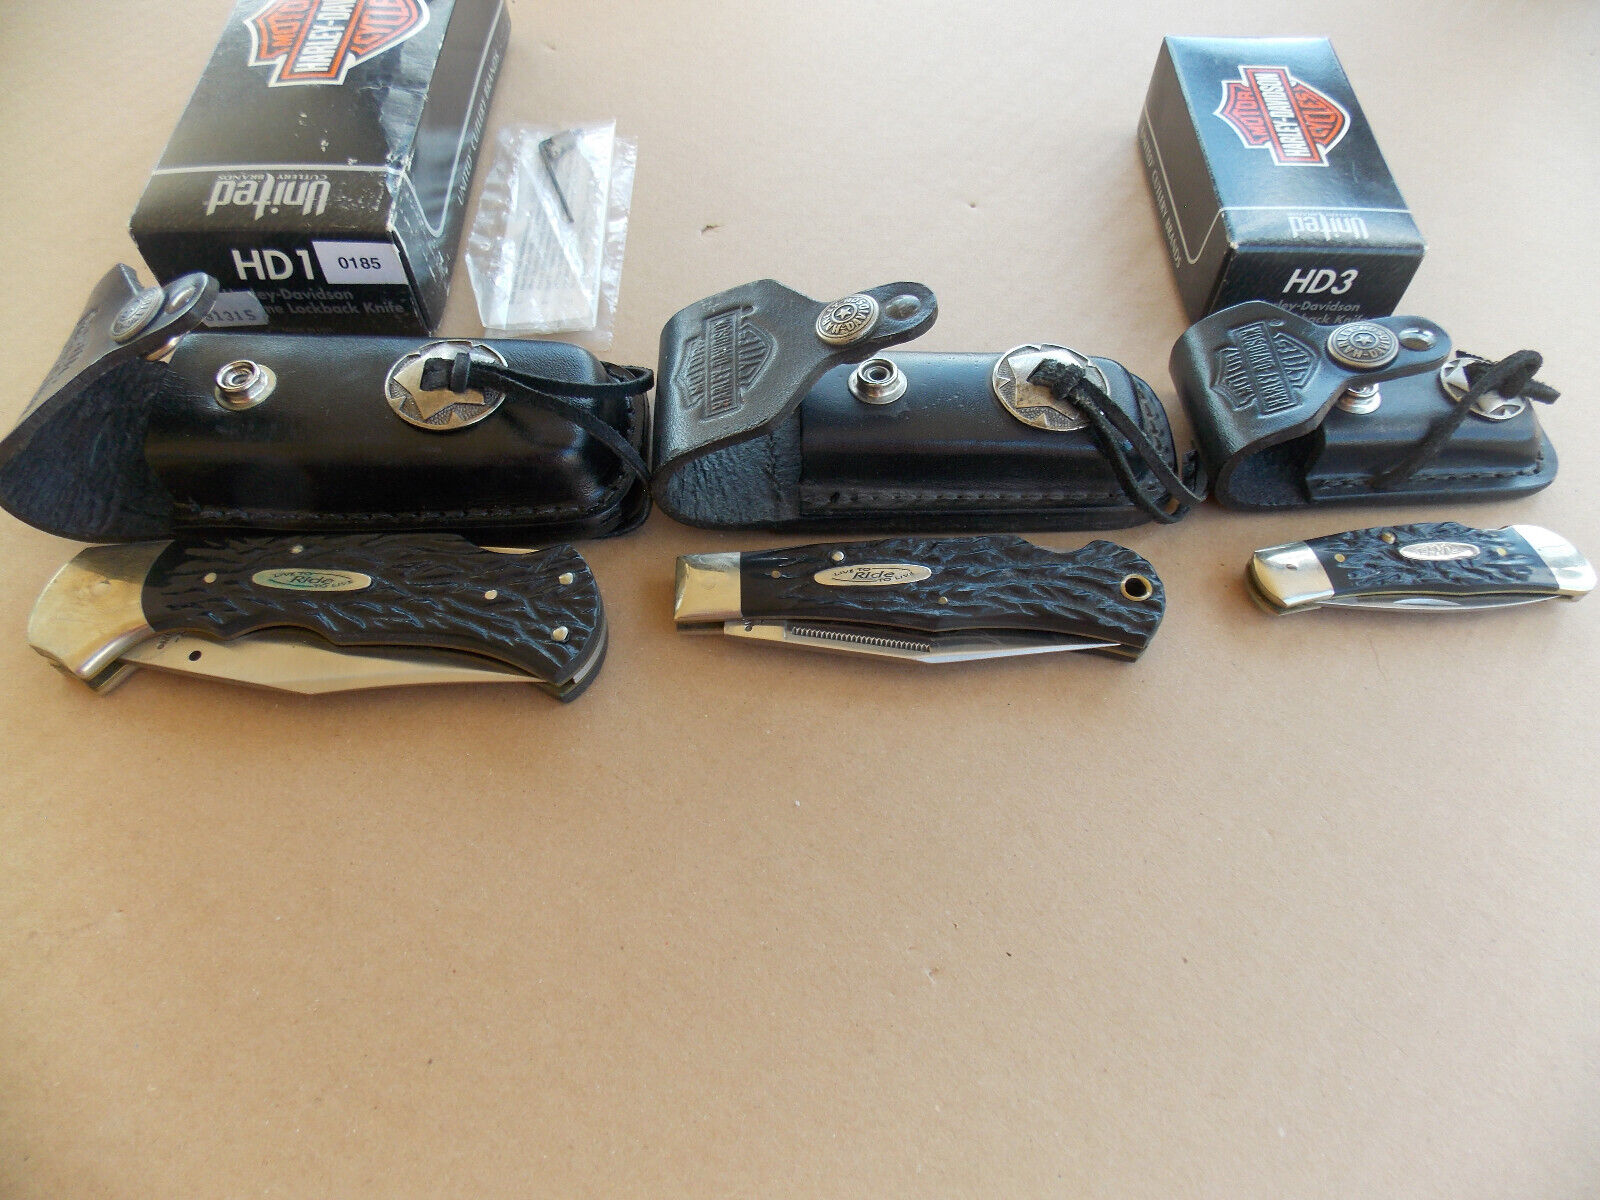  HARLEY DAVIDSON  KNIFE  1998 THREE KNIFE COLLECTORS SET -  HD-1, HD-2, HD-3 